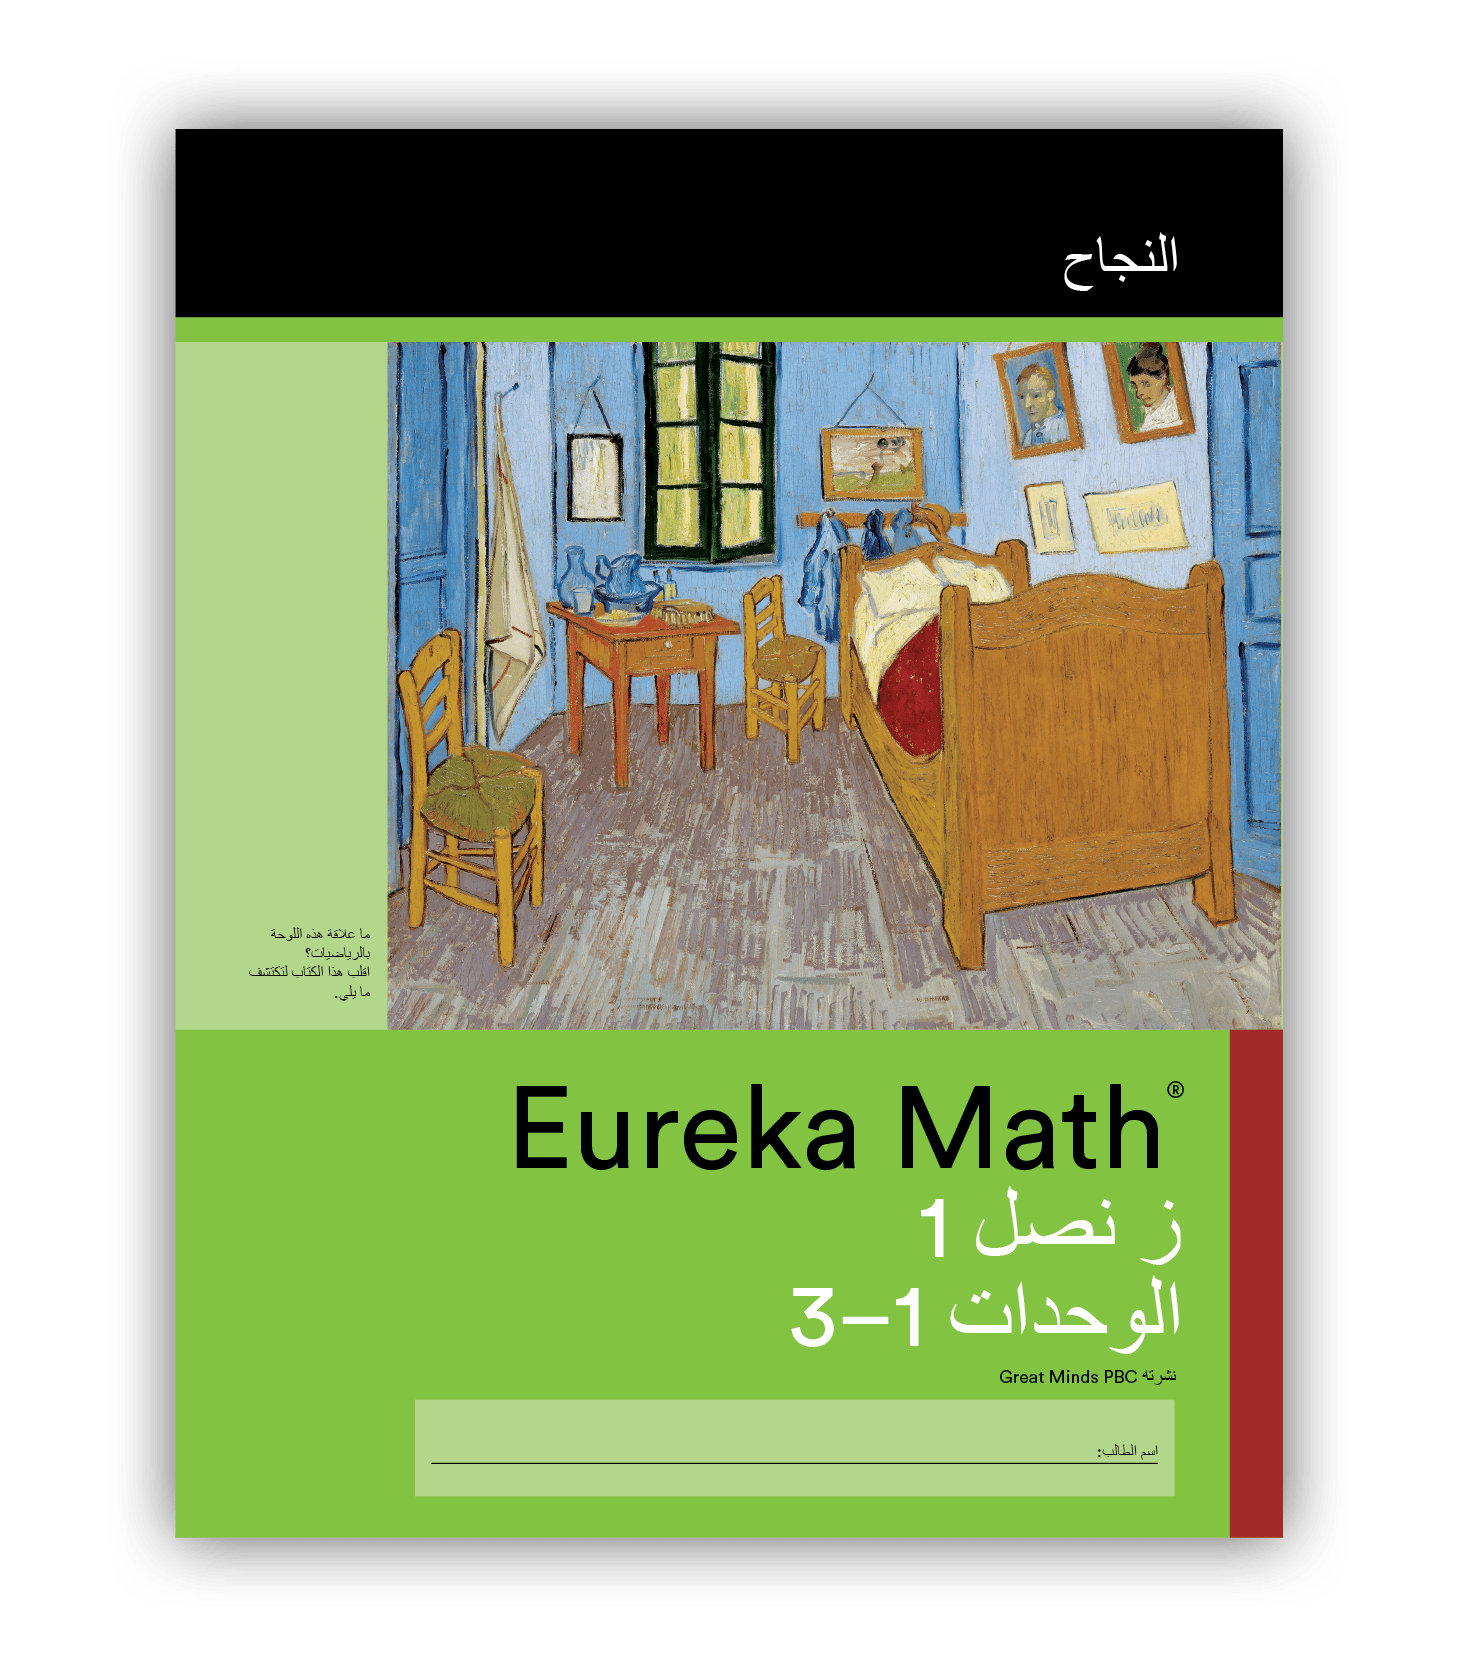 Eureka Math Succeed Book in Arabic for Grade 1